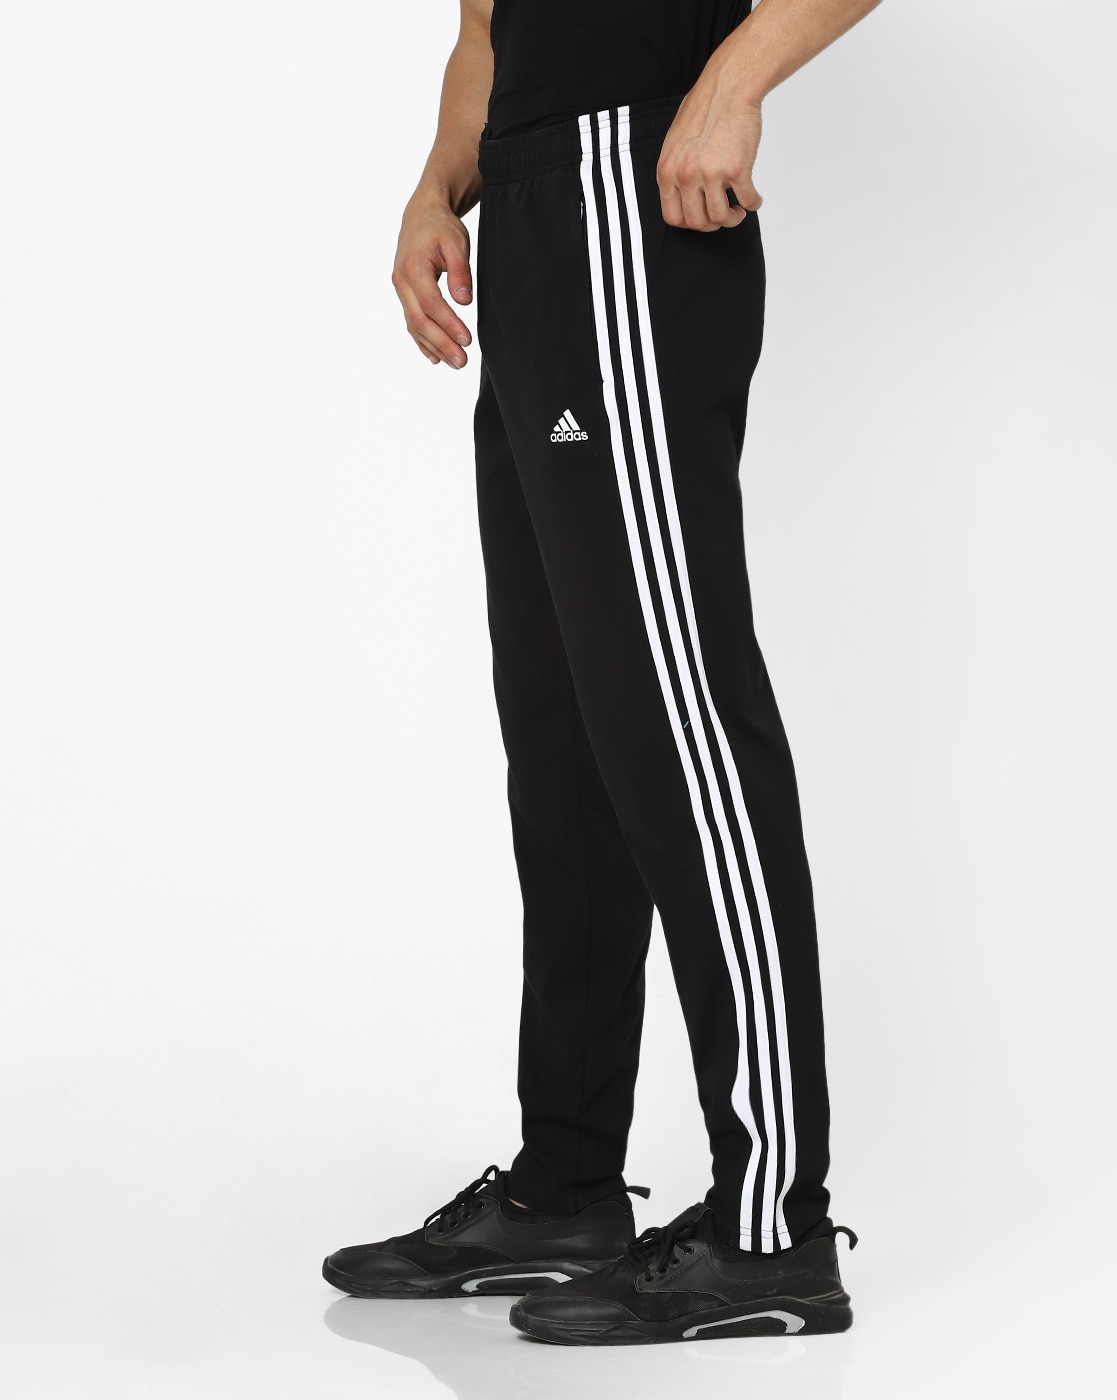 Adidas Originals Mens Black Track pants with three stripes | eBay